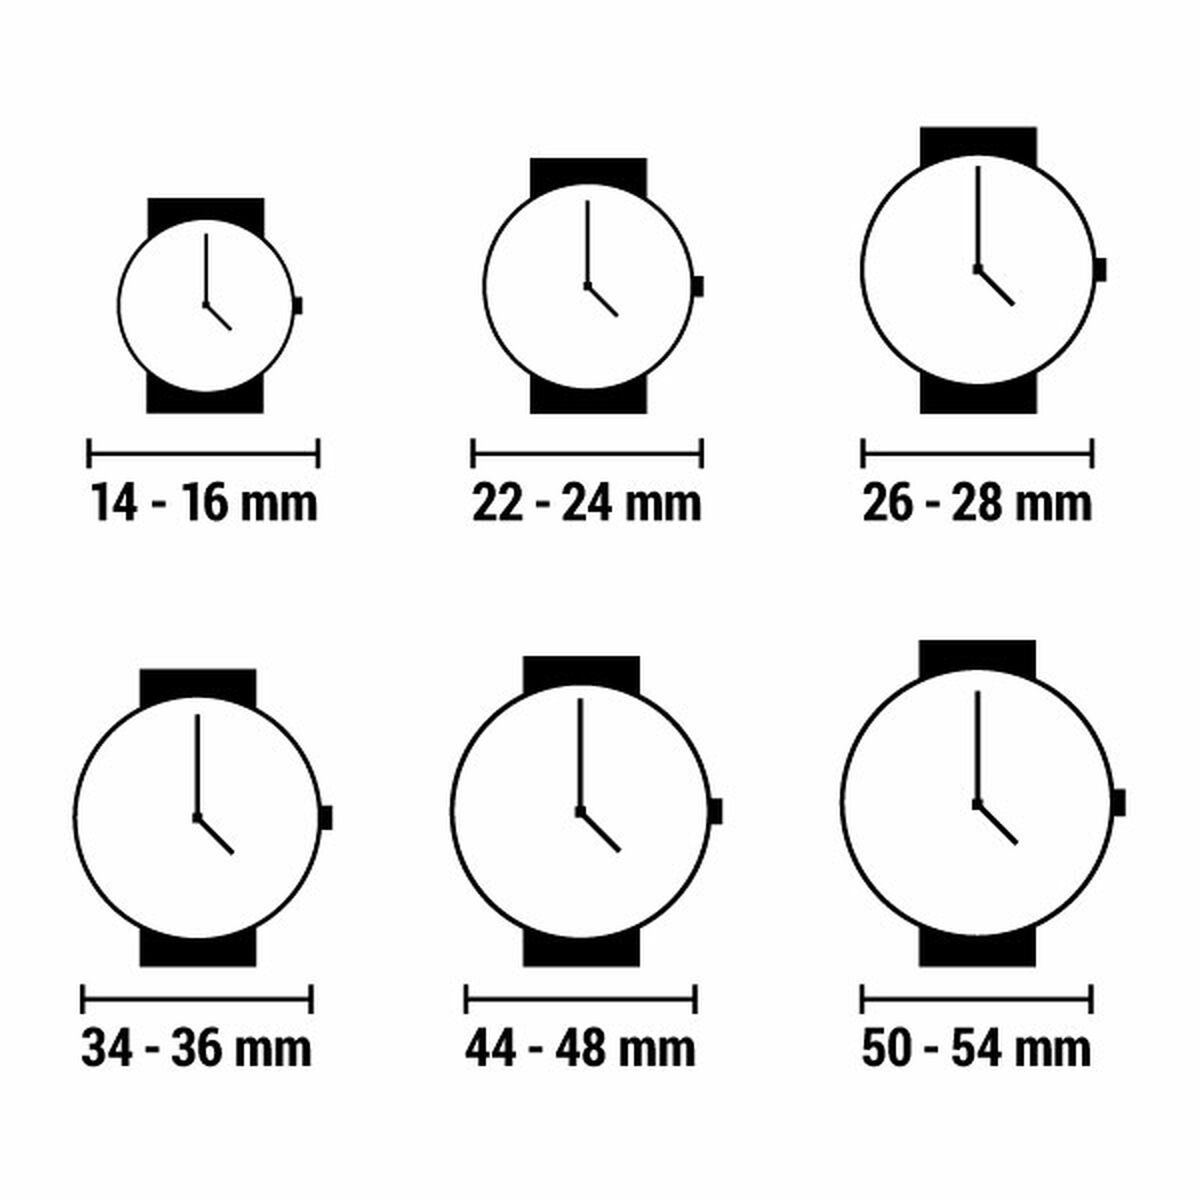 Horloge Dames Swatch STRIURE (Ø 41 mm)